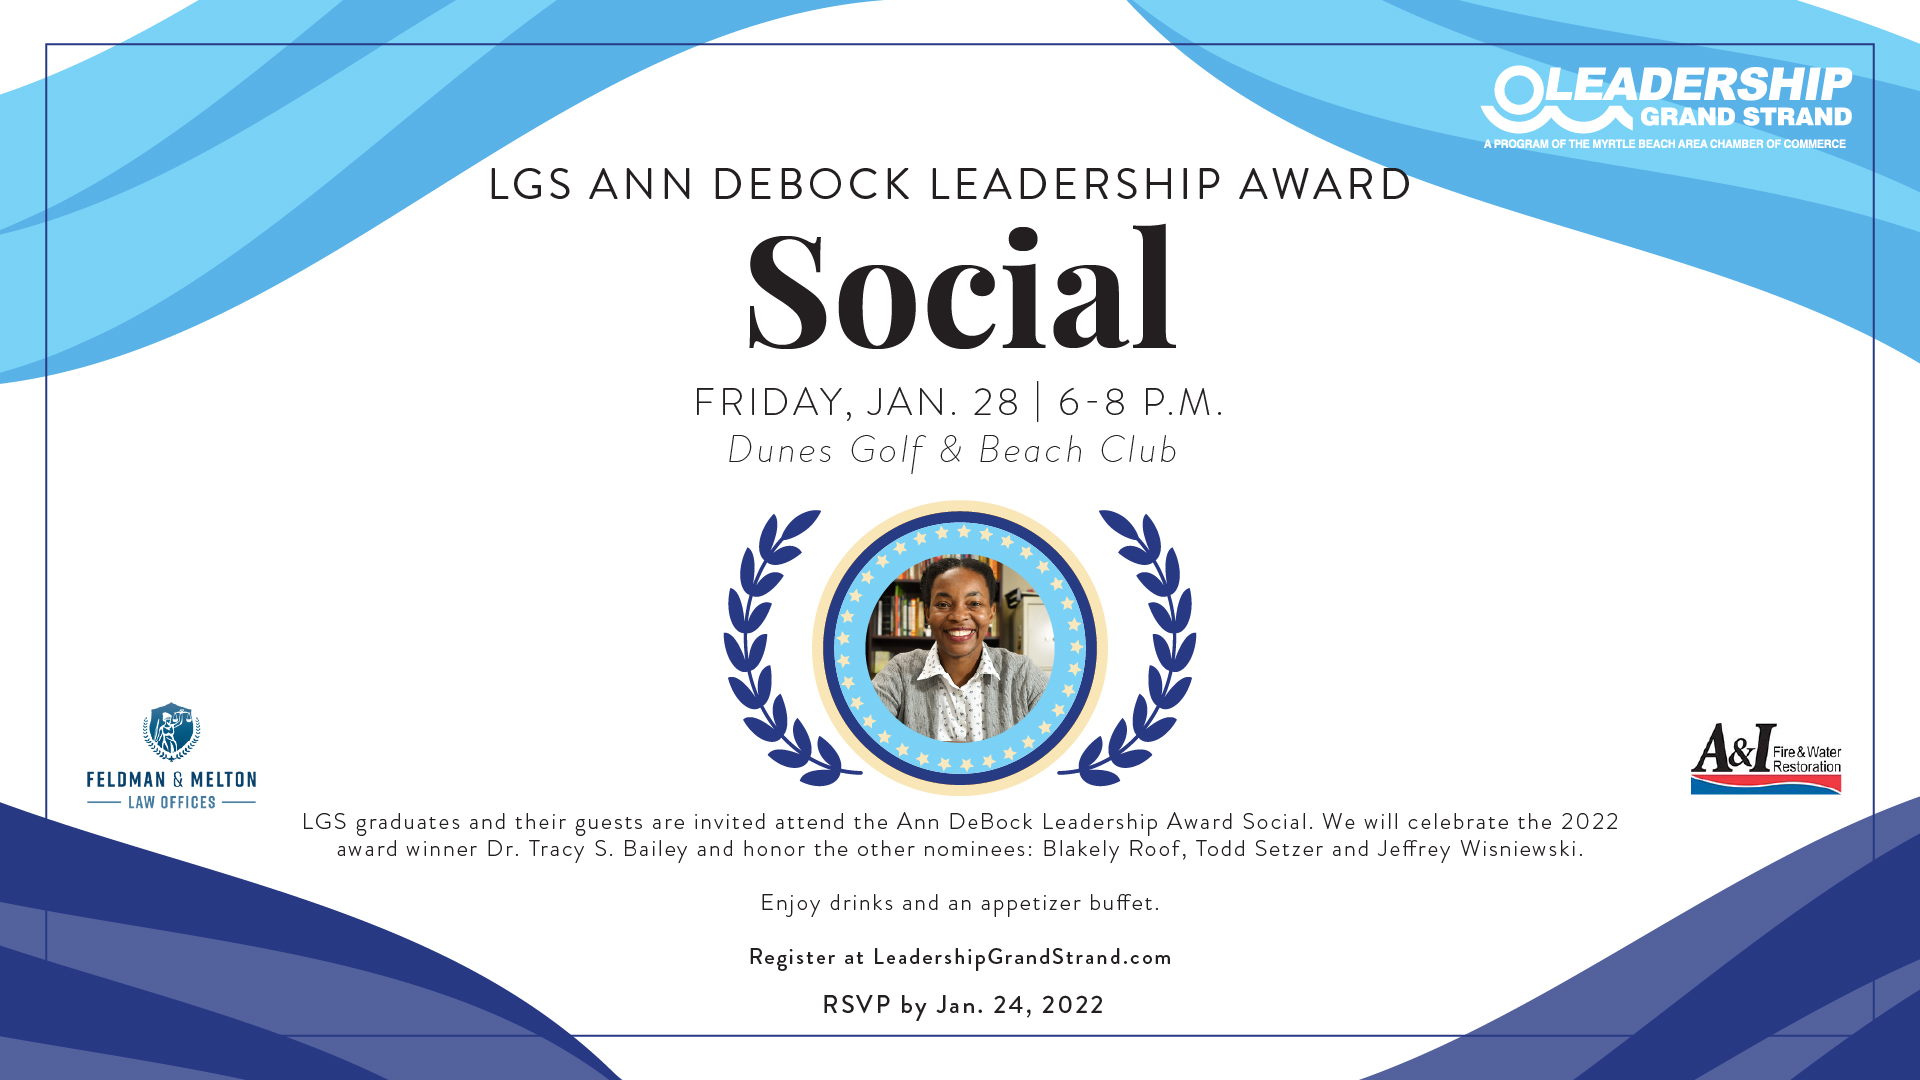 LGS Ann DeBock Leadership Award Social